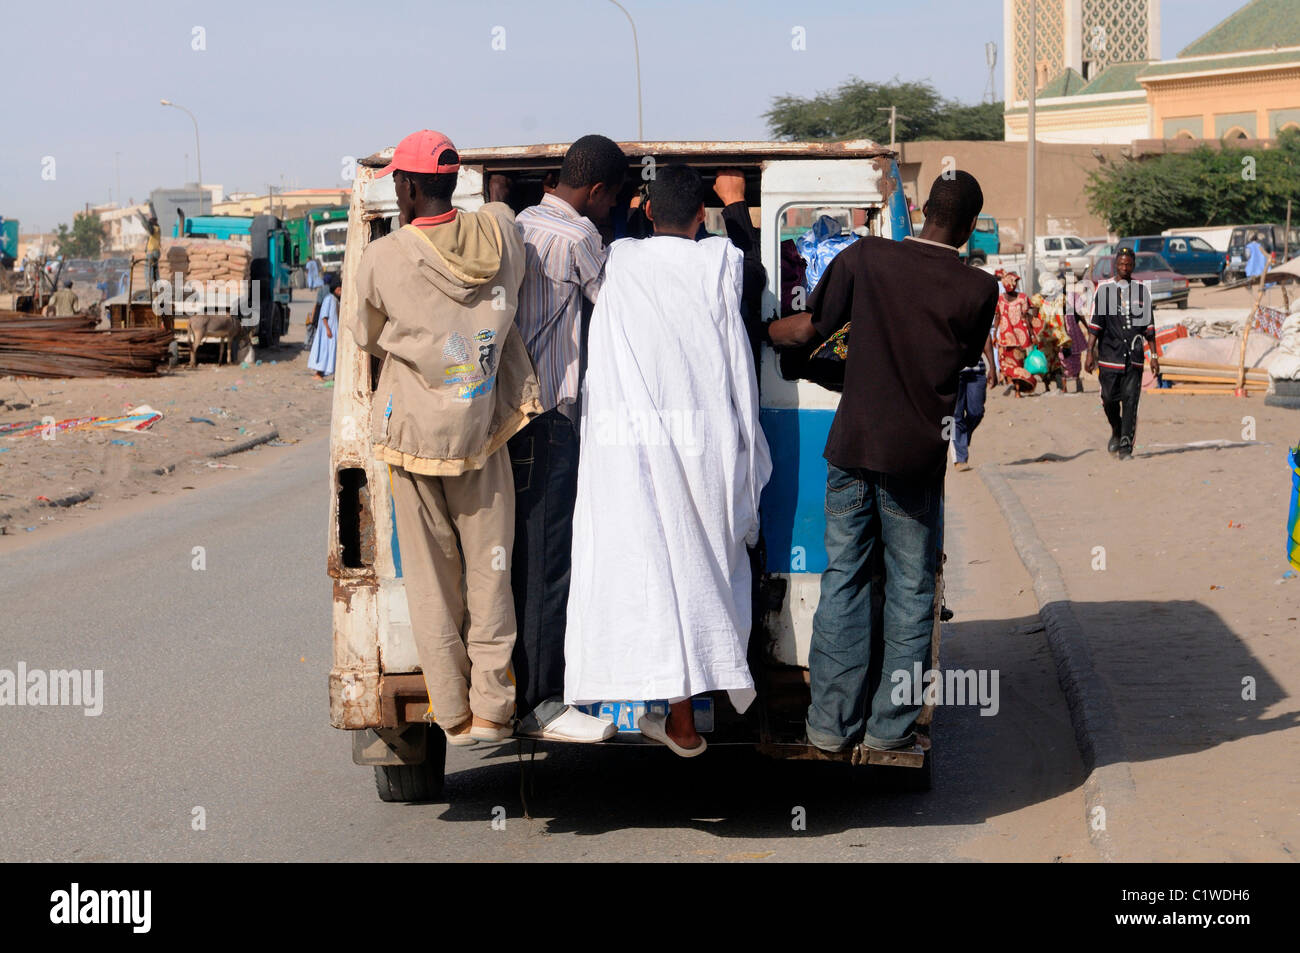 Mauritania, Nouakchott, Passengers standing on back of van Stock Photo